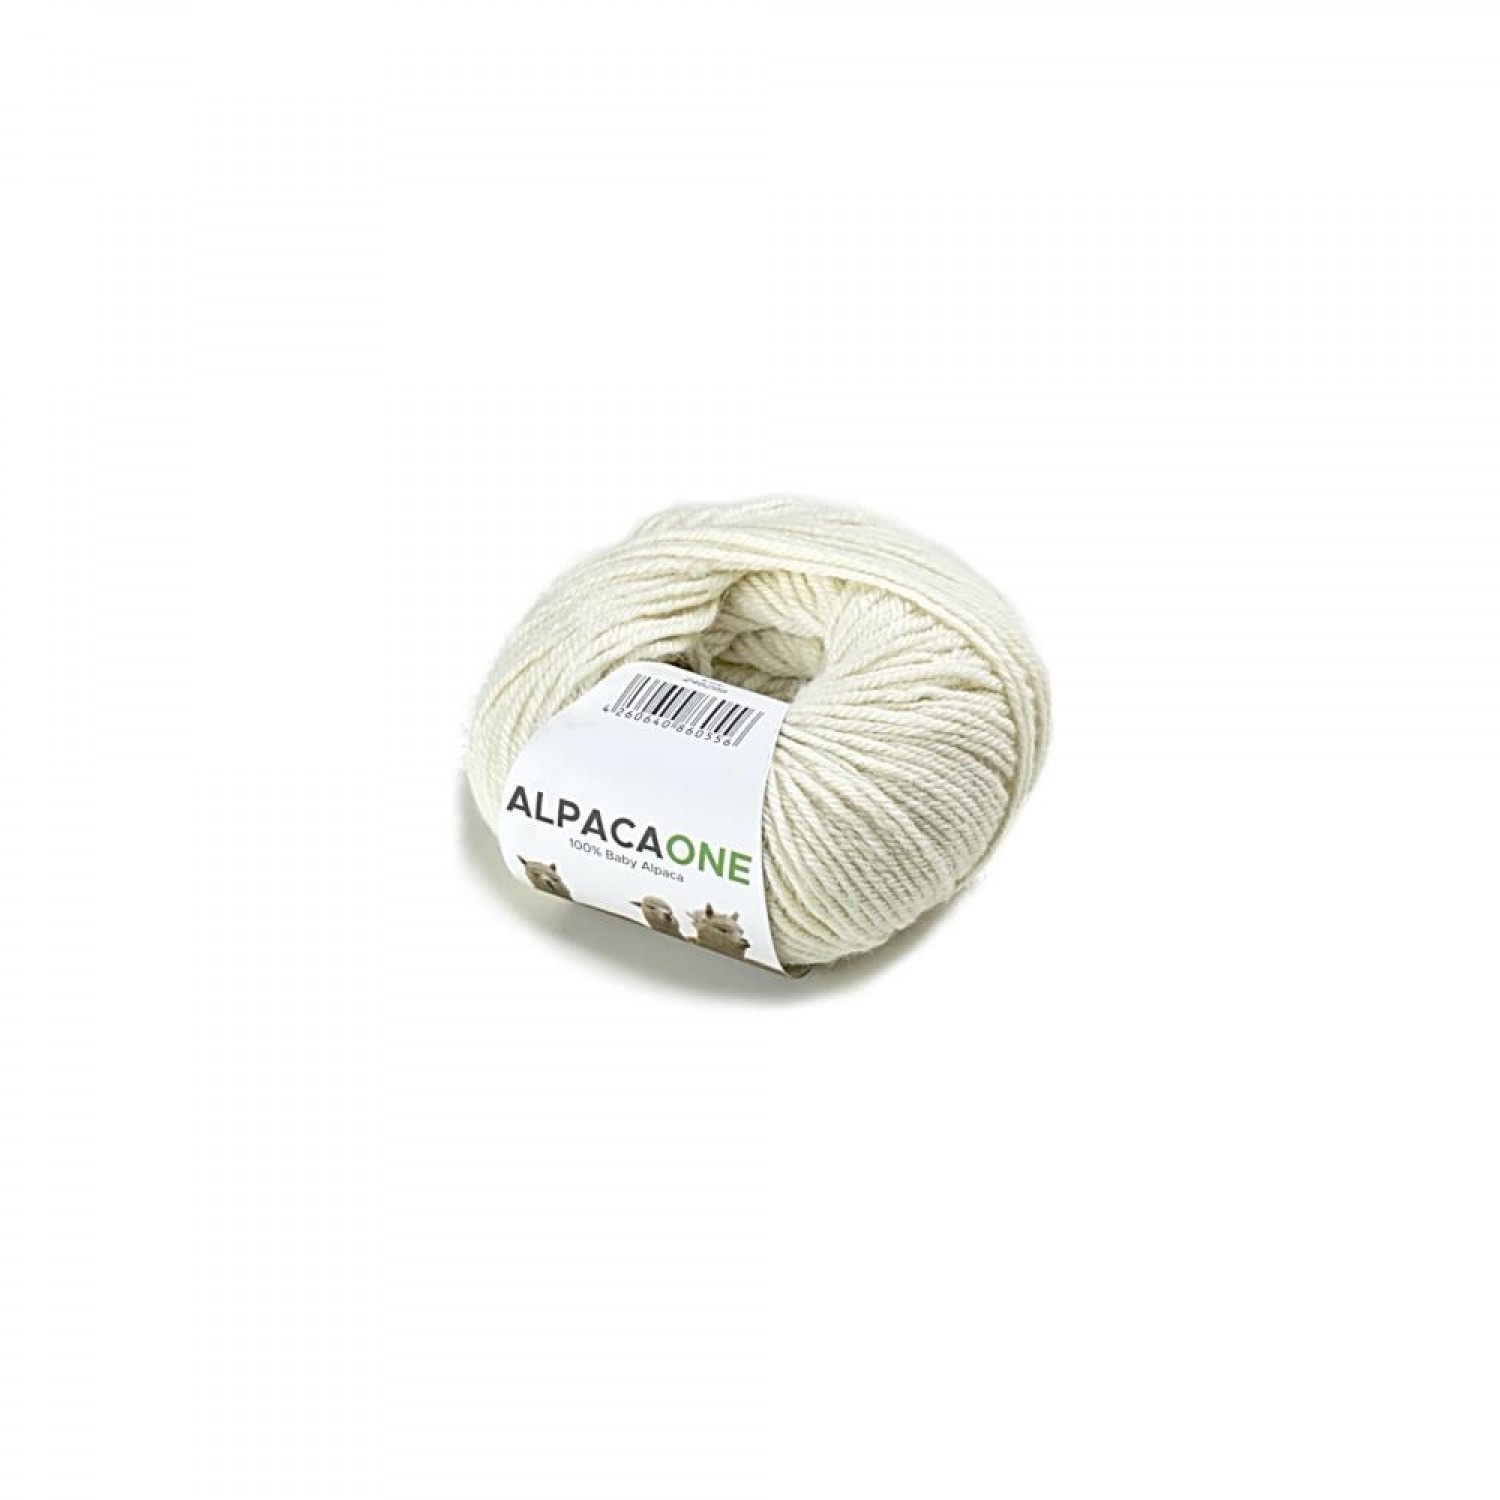 Alpacaone Baby Alpaca wool ball 50g natural OEKO-TEX